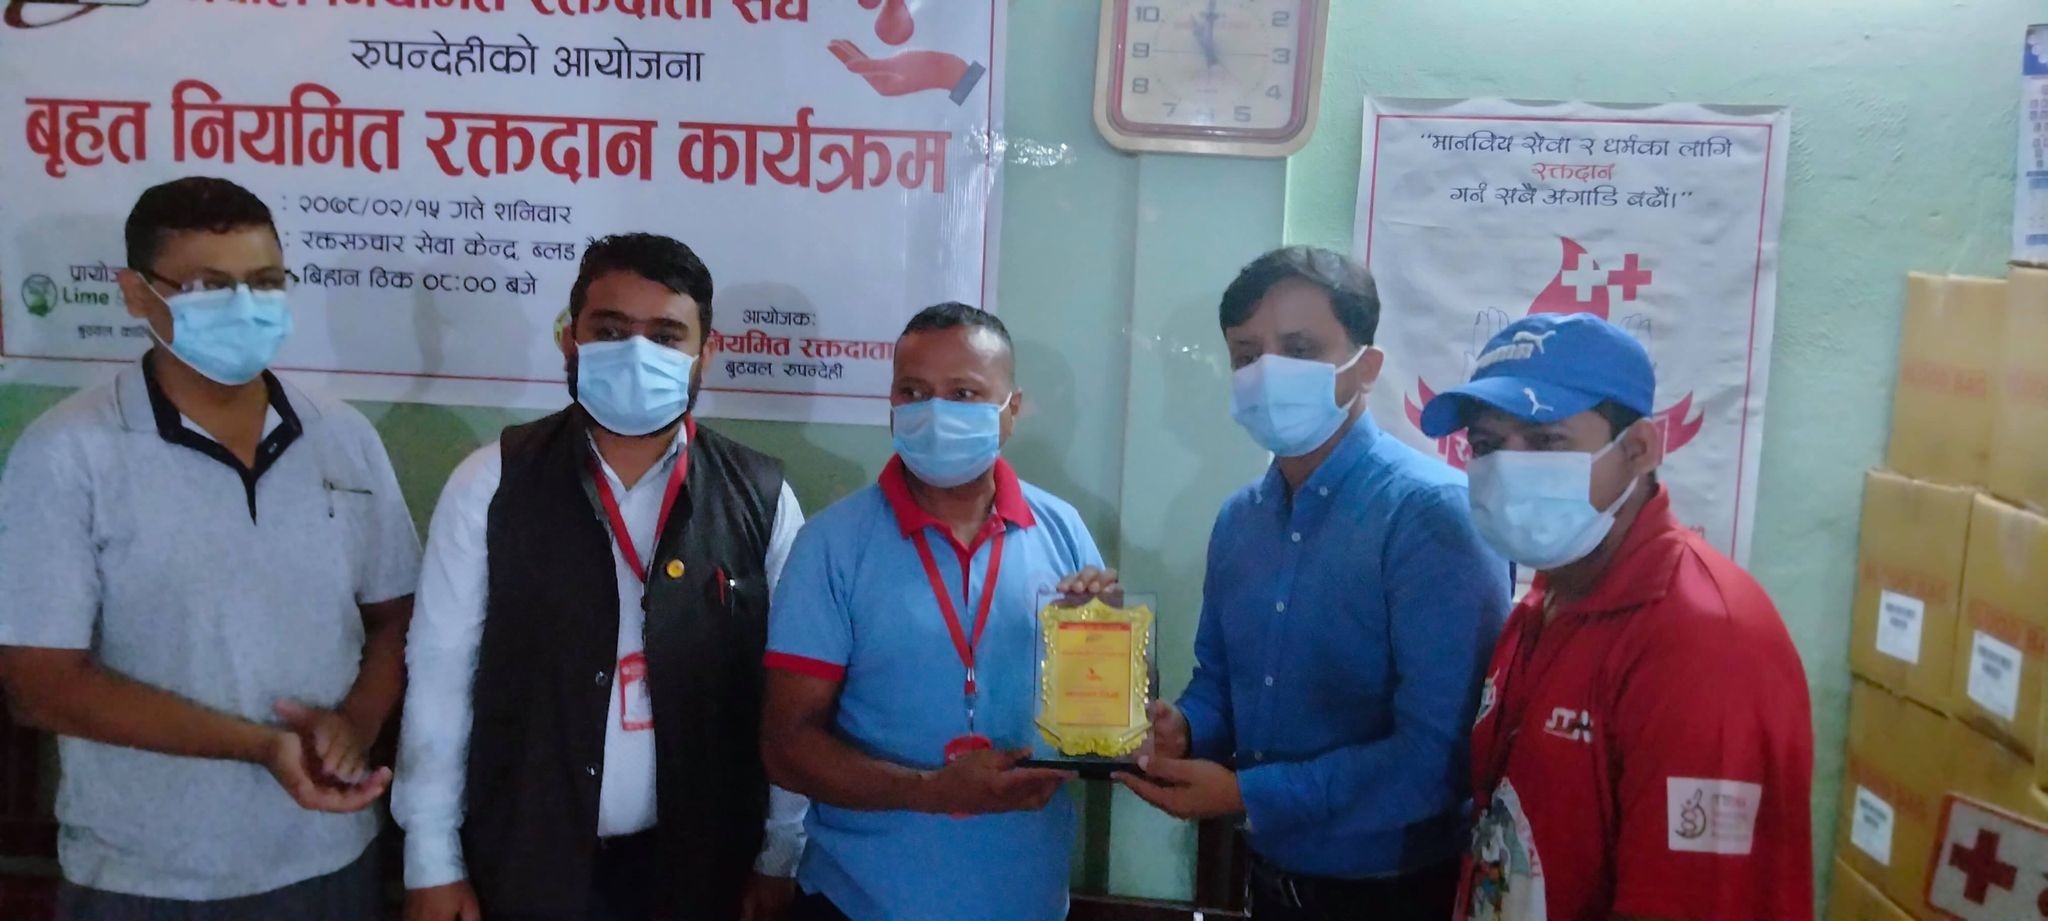 गणतन्त्र दिवसमा नेपाल नियमित रक्तदाता संघद्धारा १०७ युनिट रगत संकलन